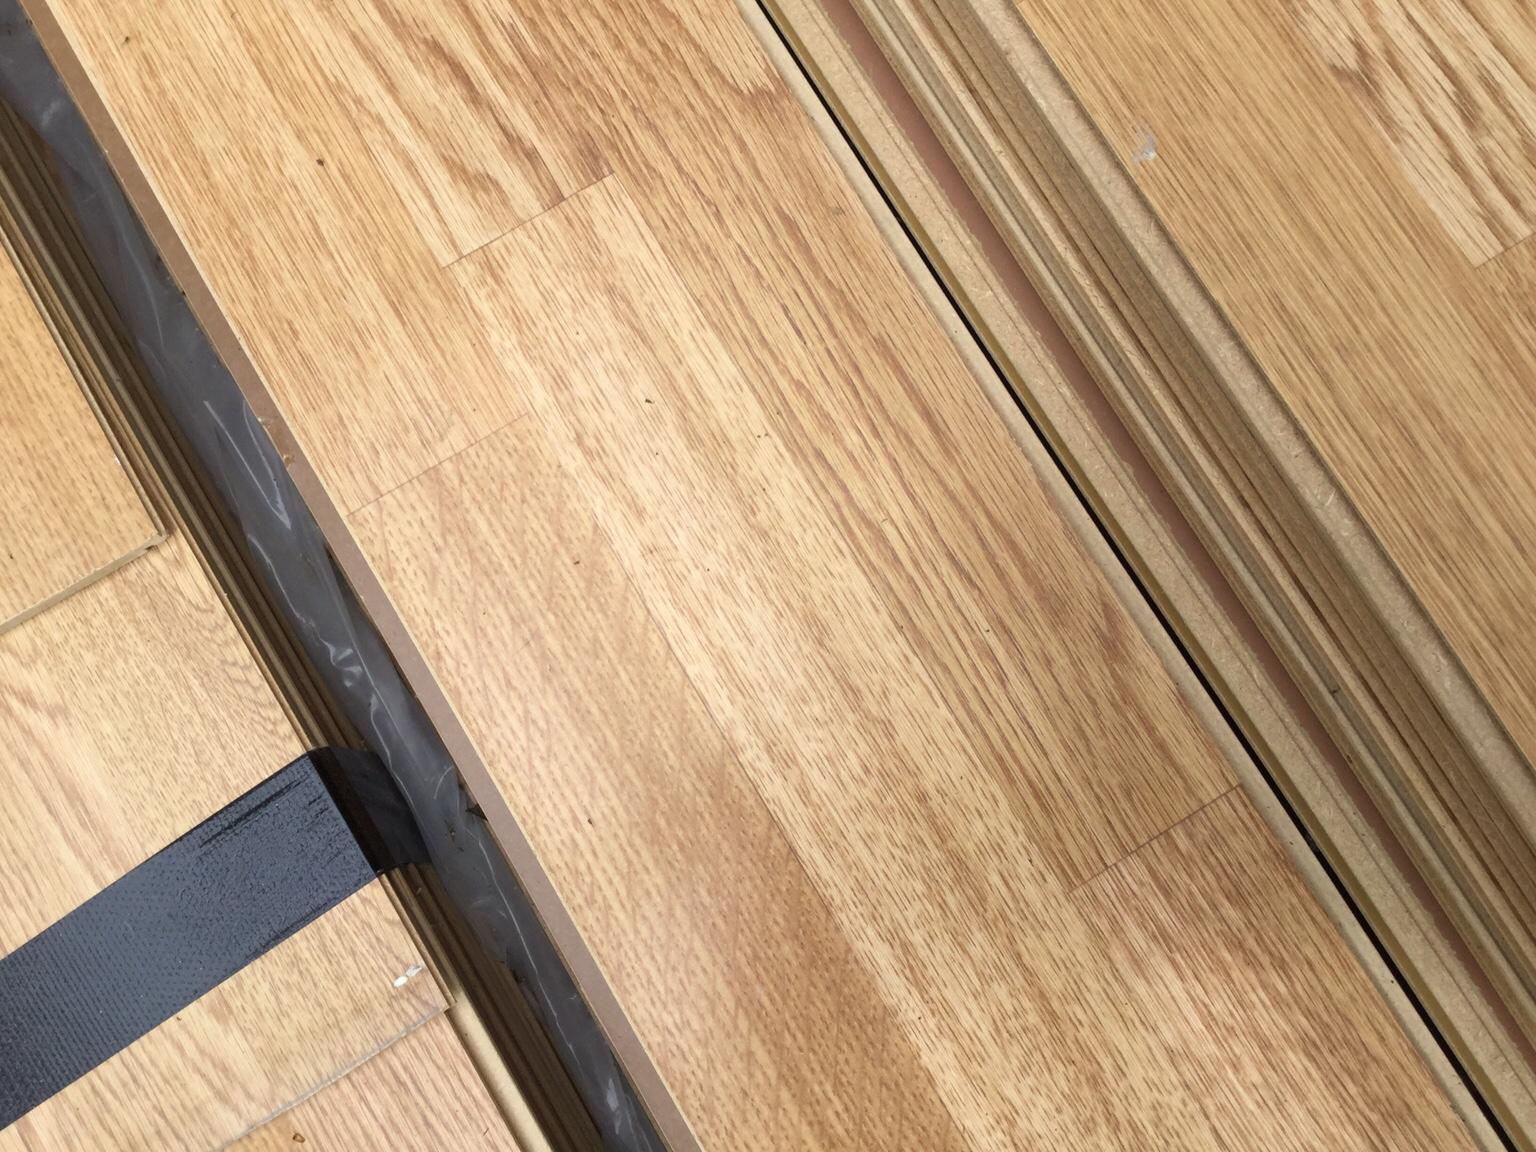 55 Light Oak Laminate Flooring Boards In Tn26 Ashford Fur 40 00